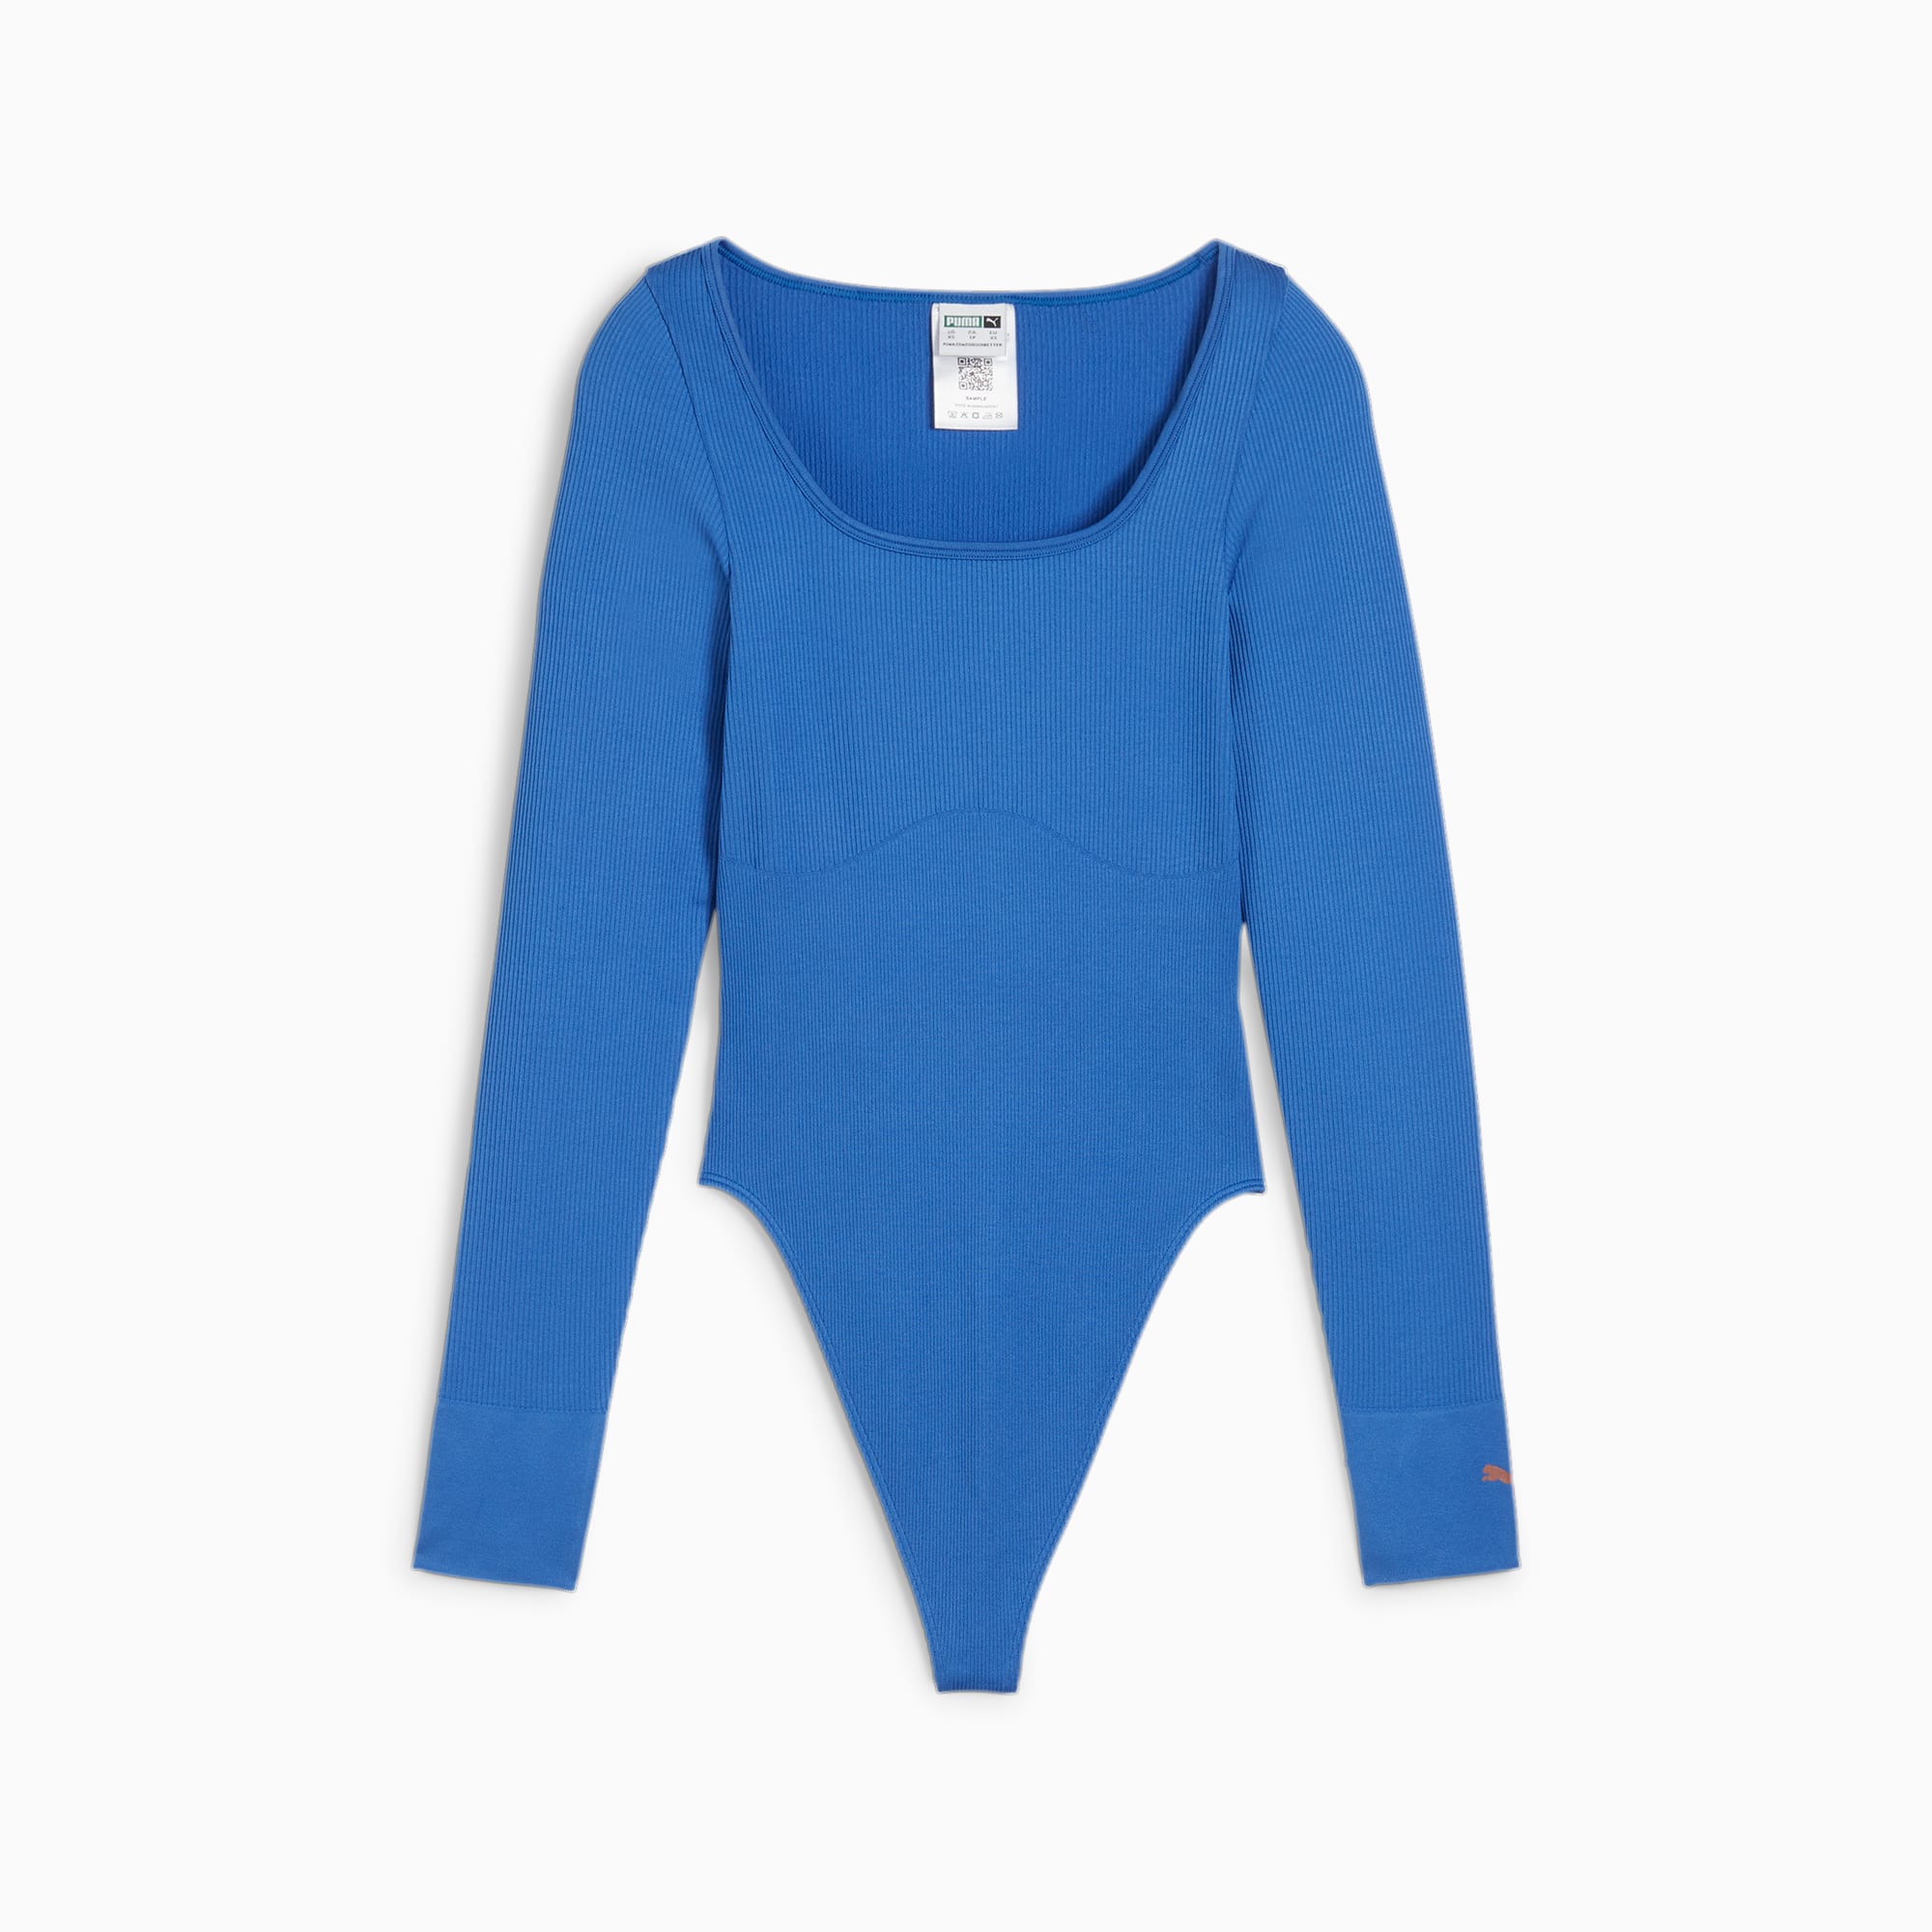 PUMA X Pamela Reif Women's Ribbed Bodysuit, Bluevender, Size XS, Clothing